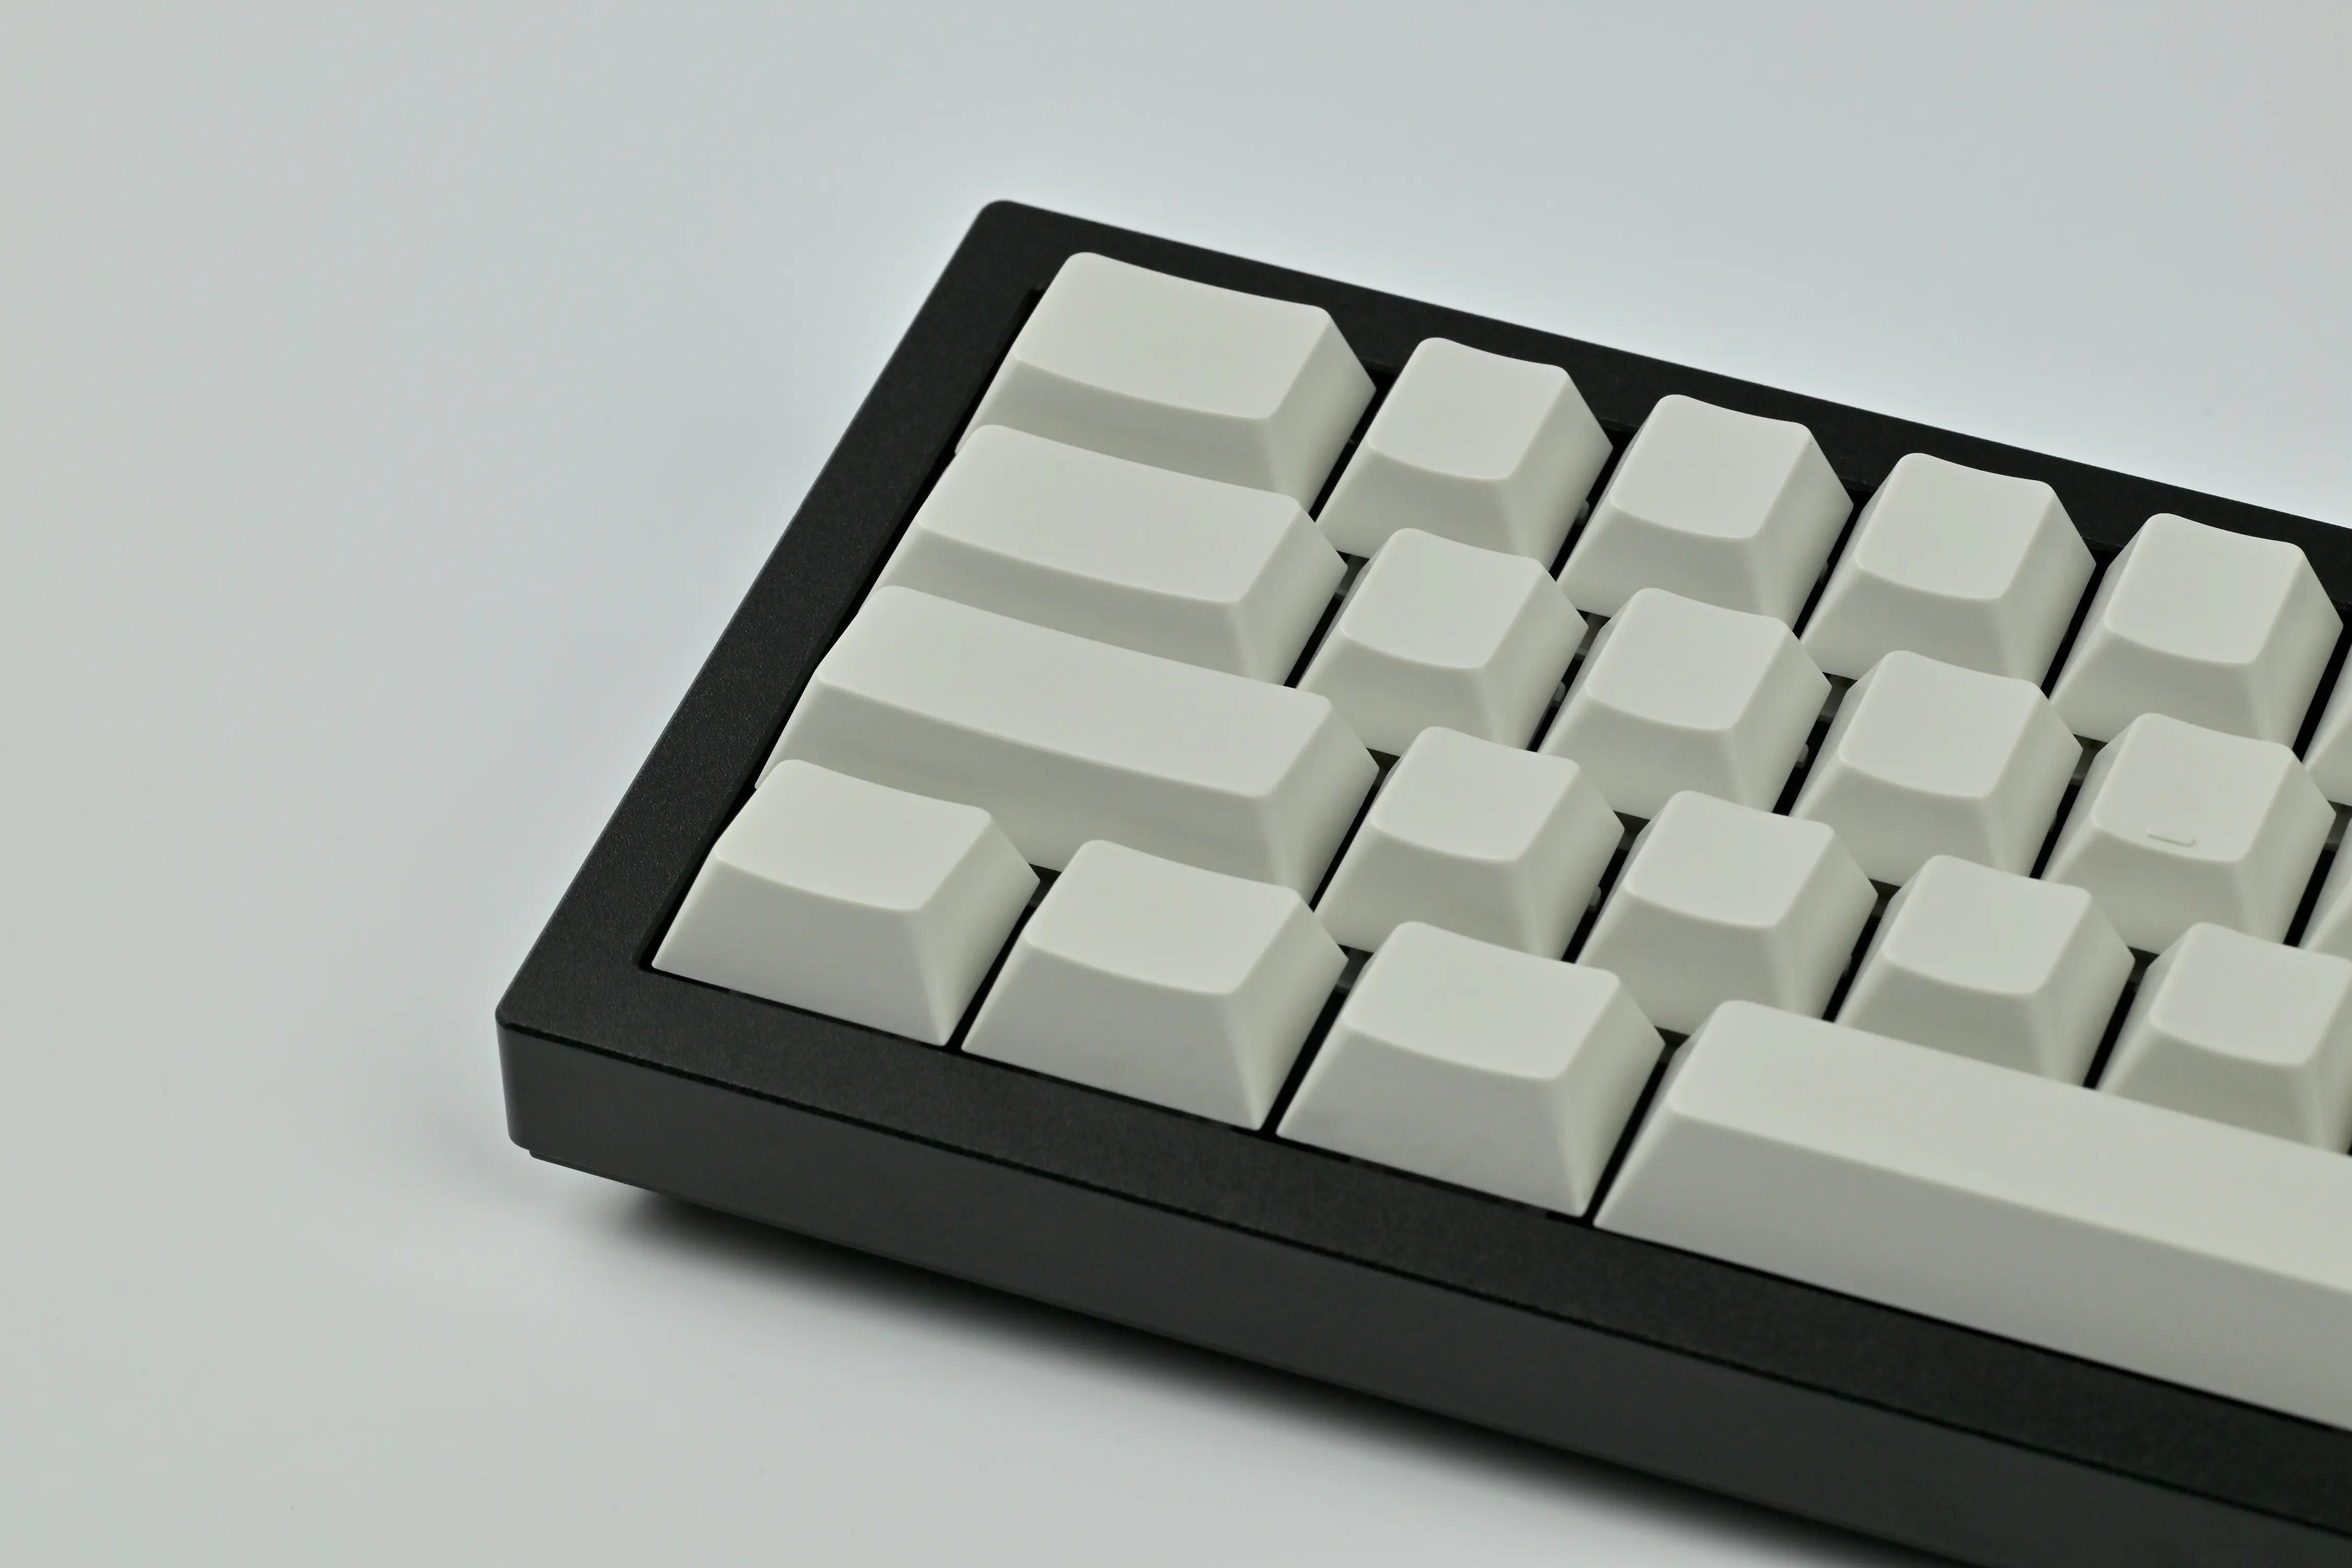 Keyreative ABS Cherry Profile Light Grey Blank Keycaps